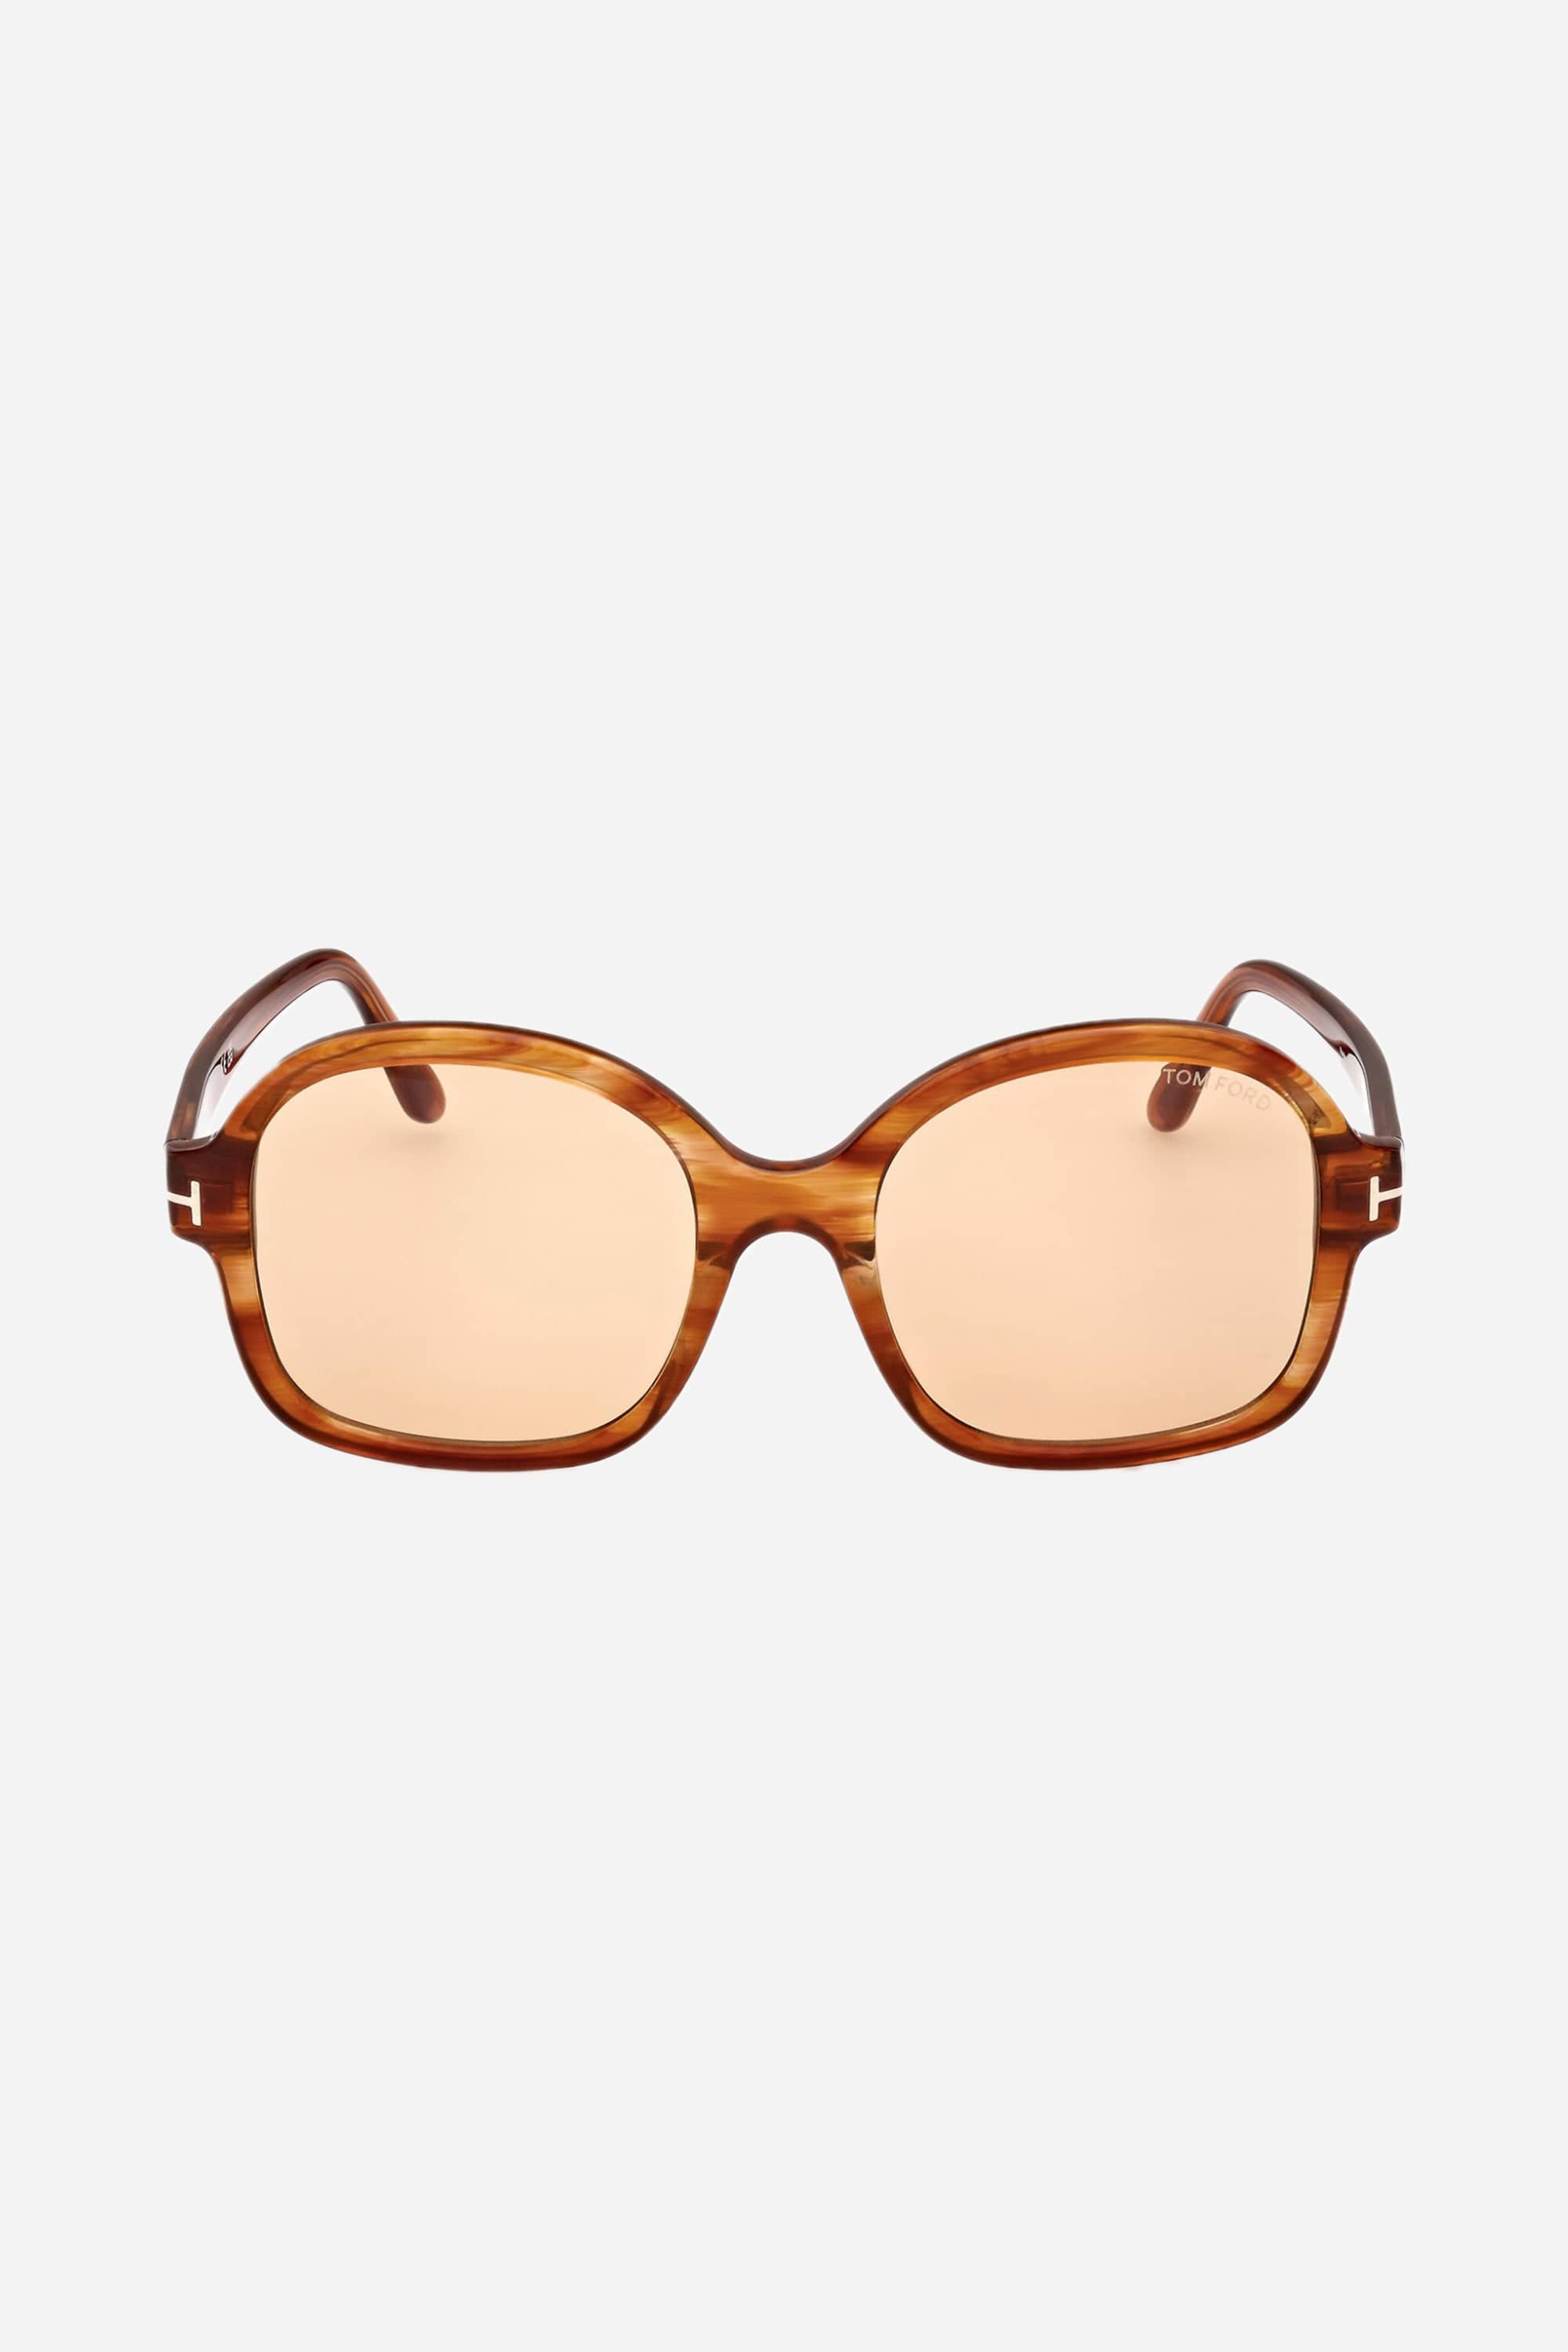 Tom Ford butterfly eye sunglasses in dark havana - Eyewear Club